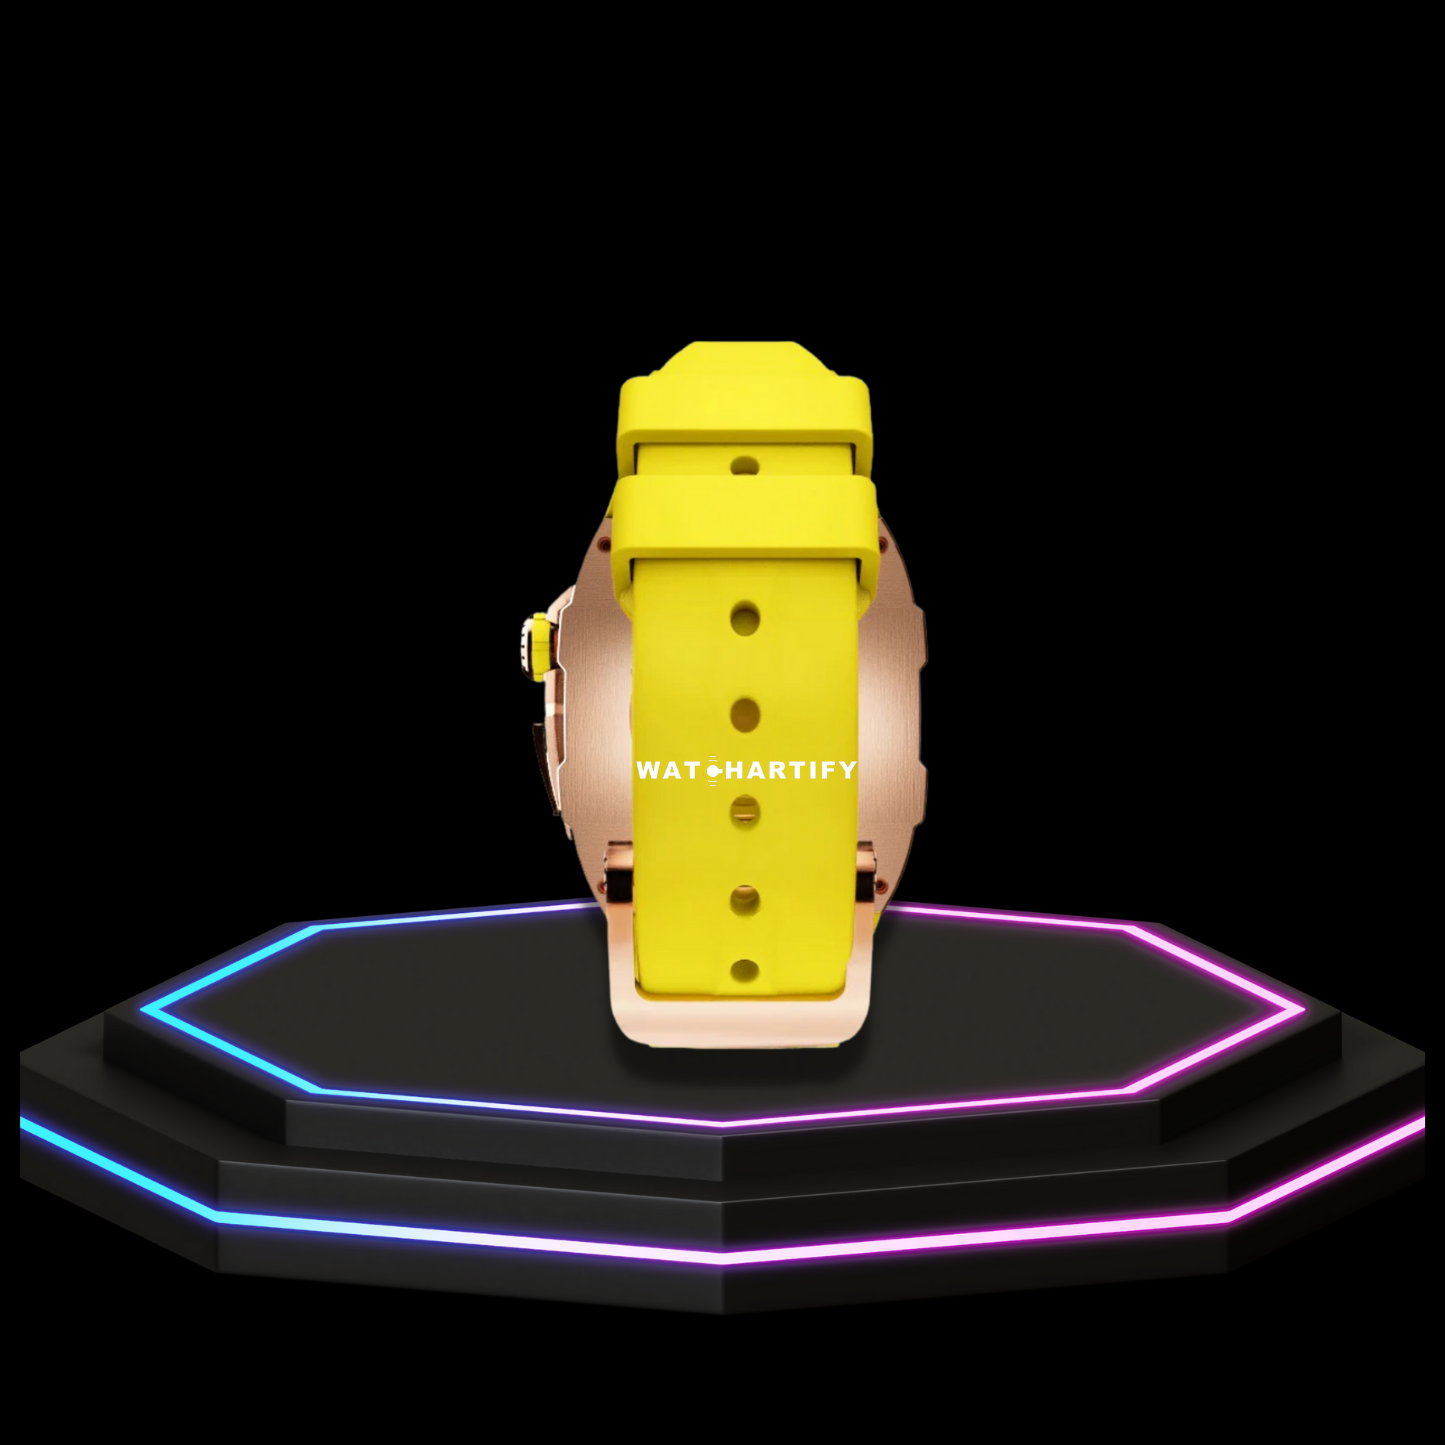 Apple Watch Case 45MM - Crystal TITAN Series Golden | Lemon Yellow Rubber